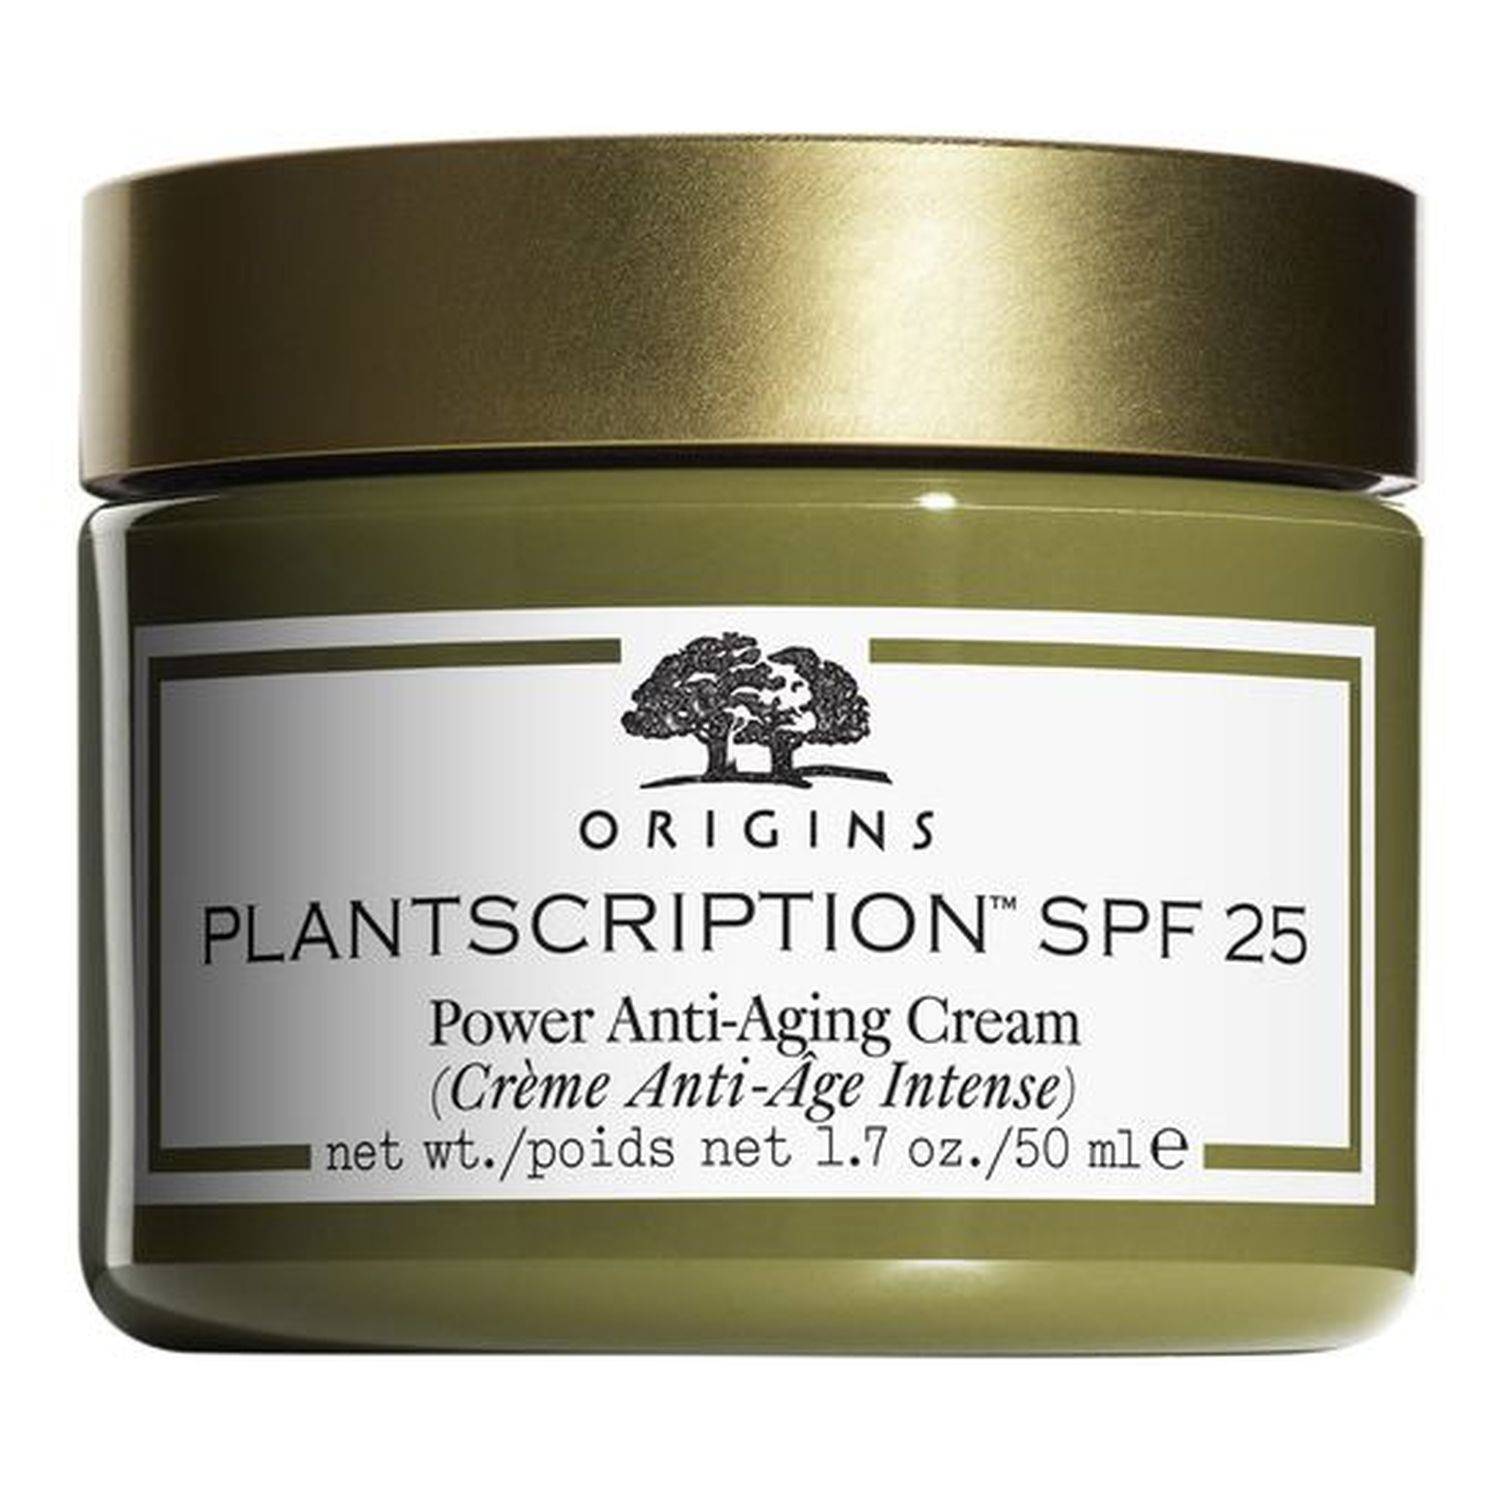 Origins Plantscription Spf 25 Power Anti-Aging Cream 50Ml